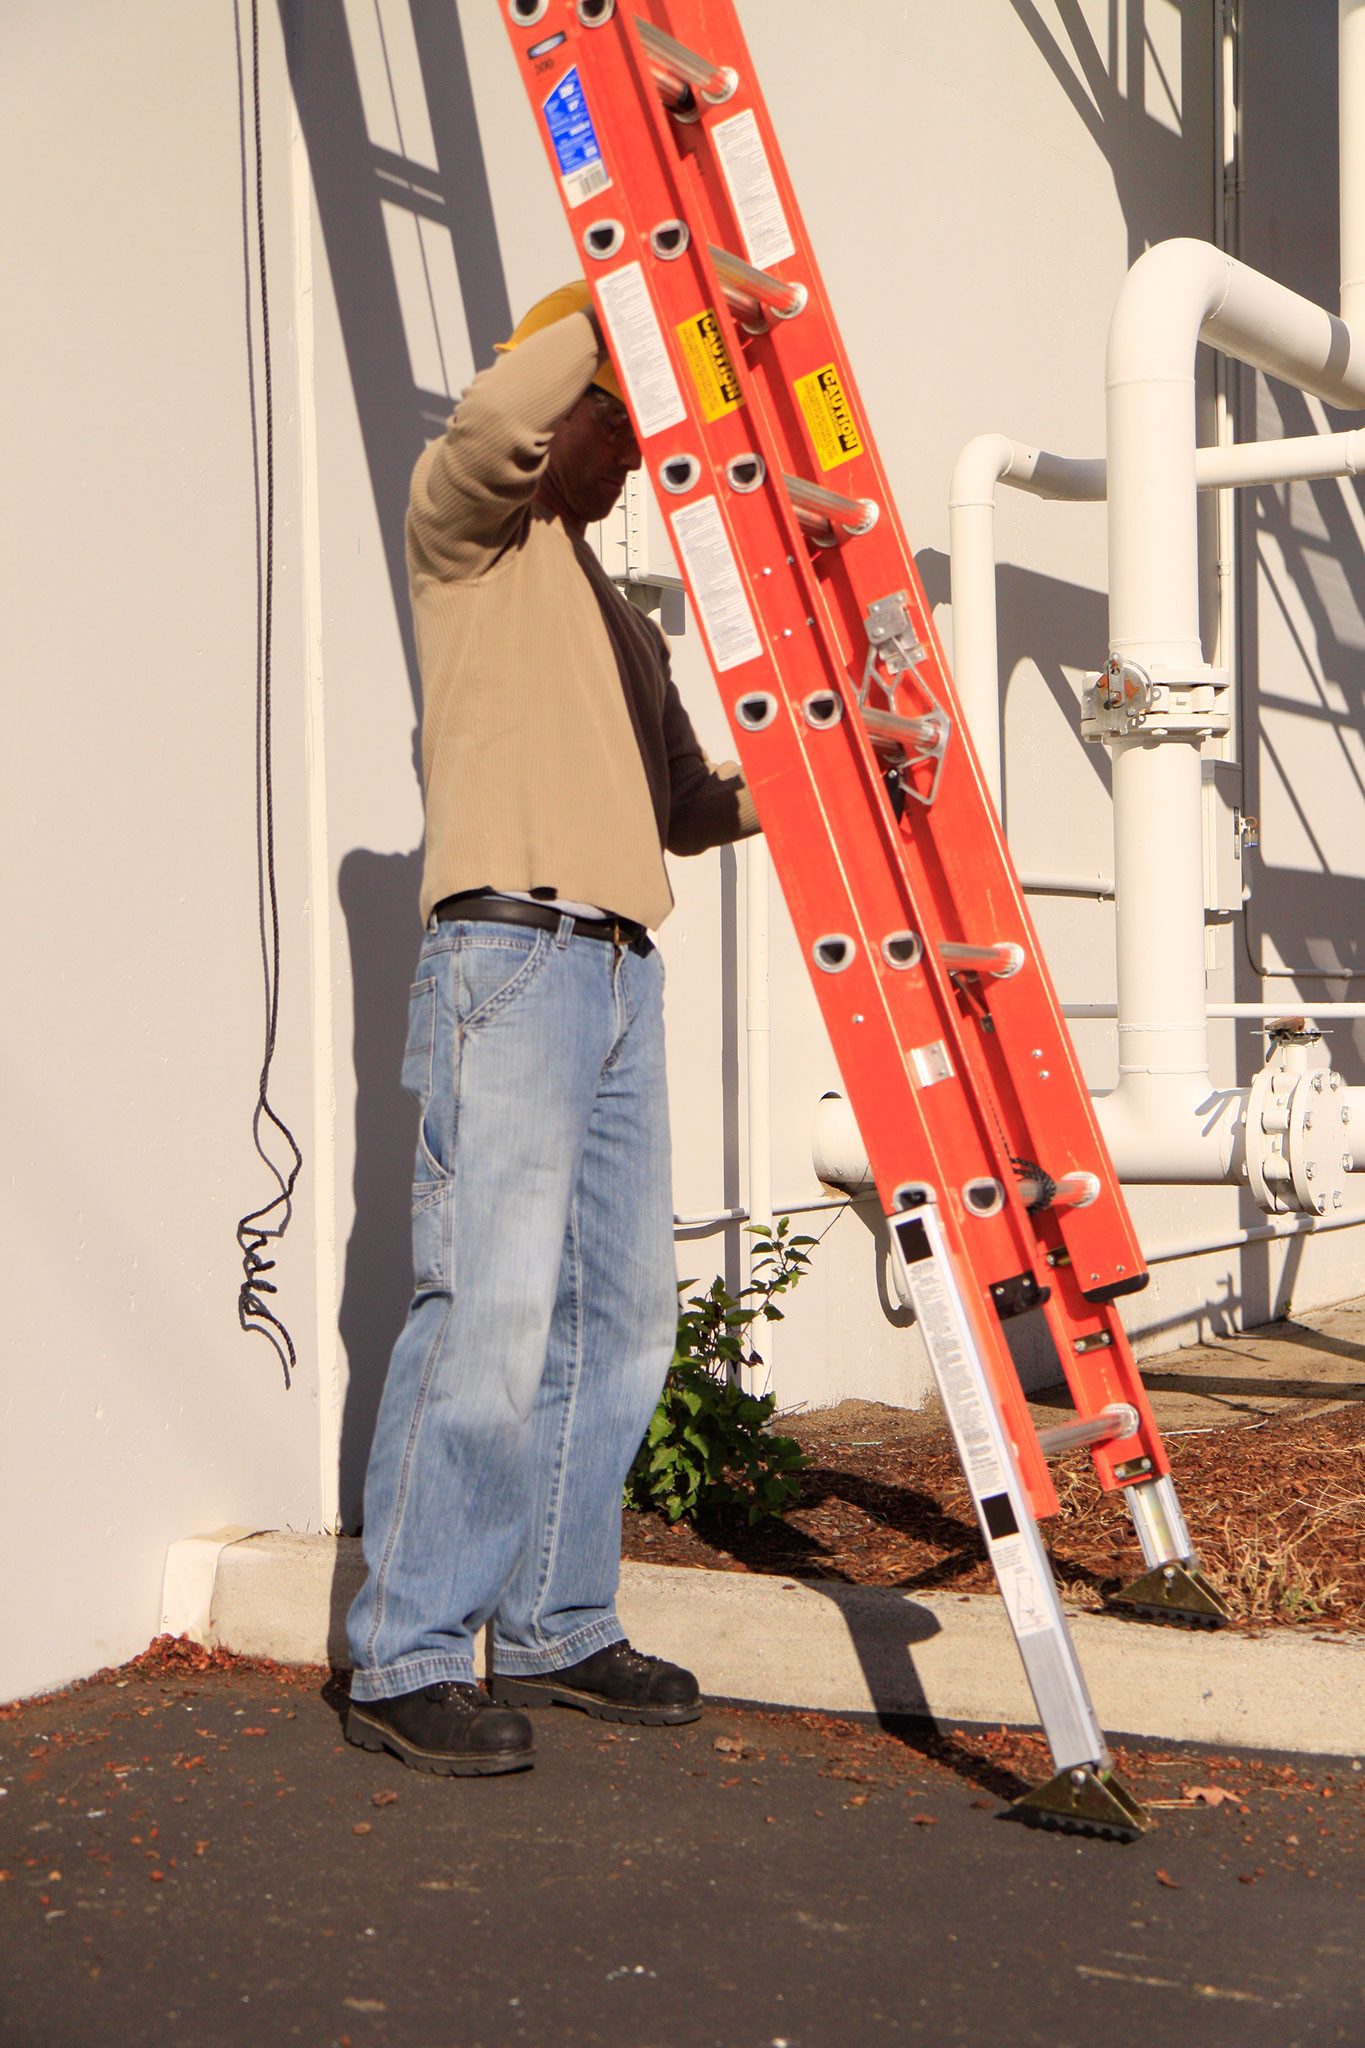 Werner PK802 Level-Master Automatic Ladder for sale online 